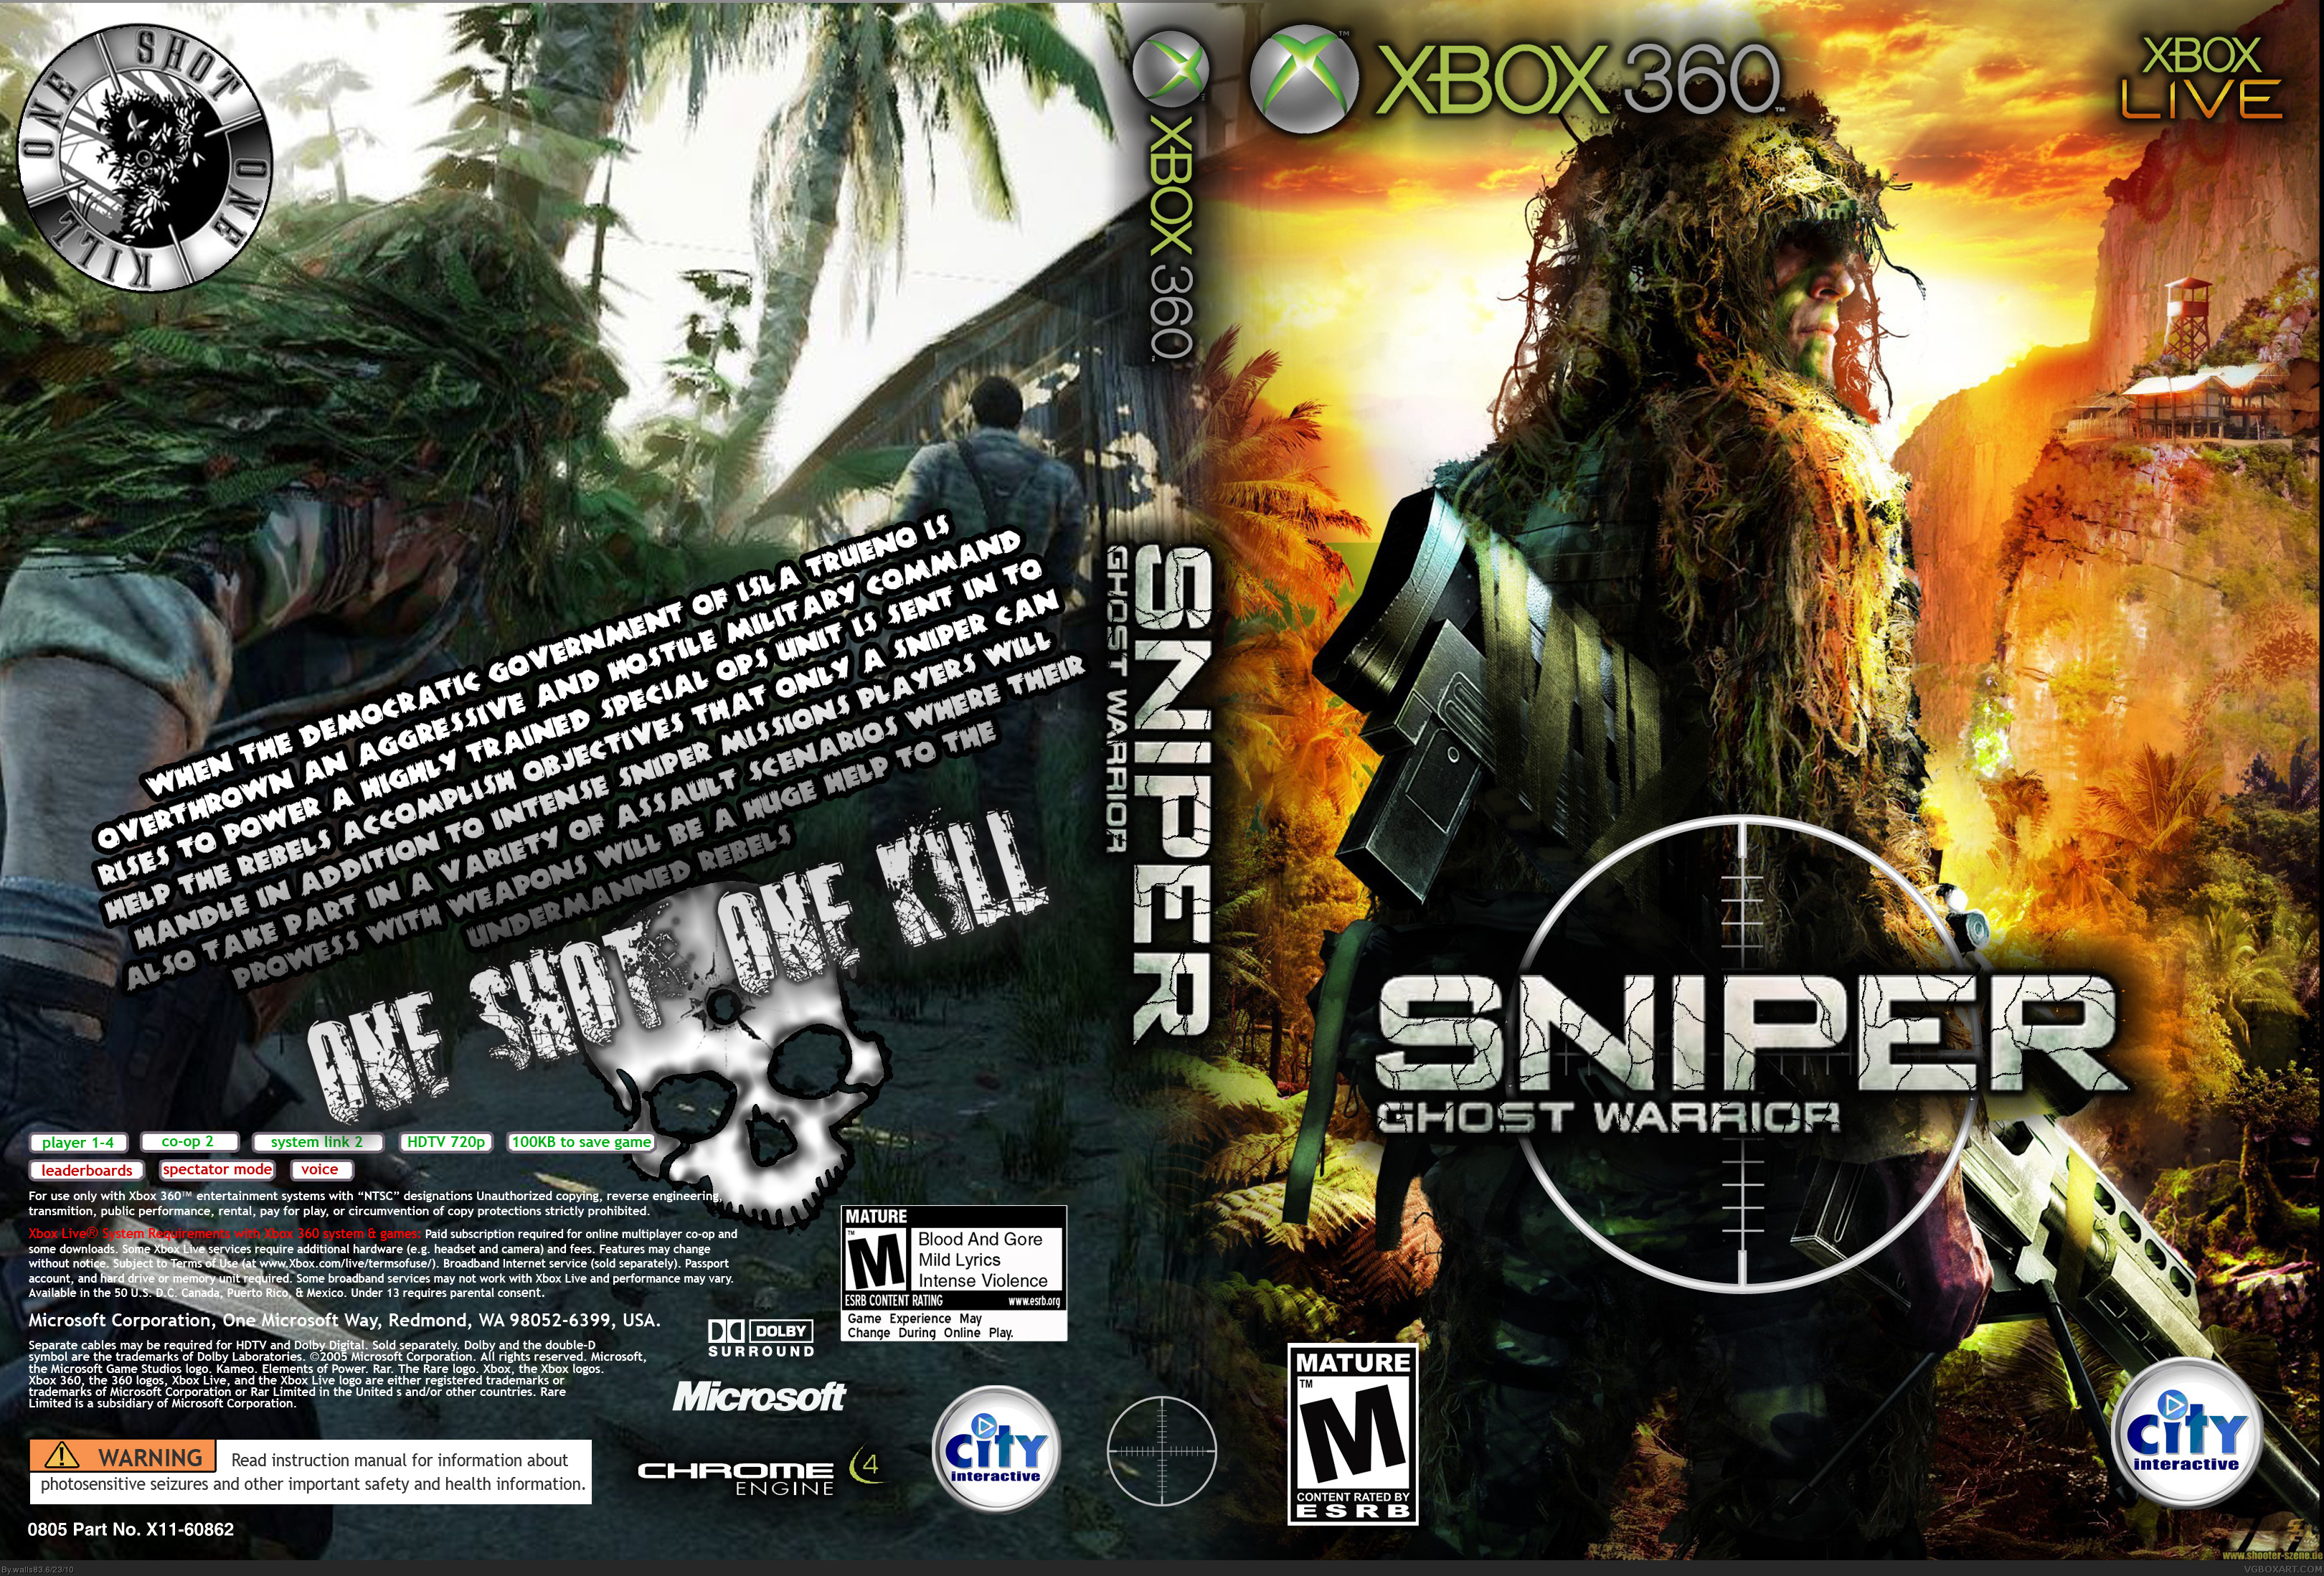 Sniper: Ghost Warrior box cover